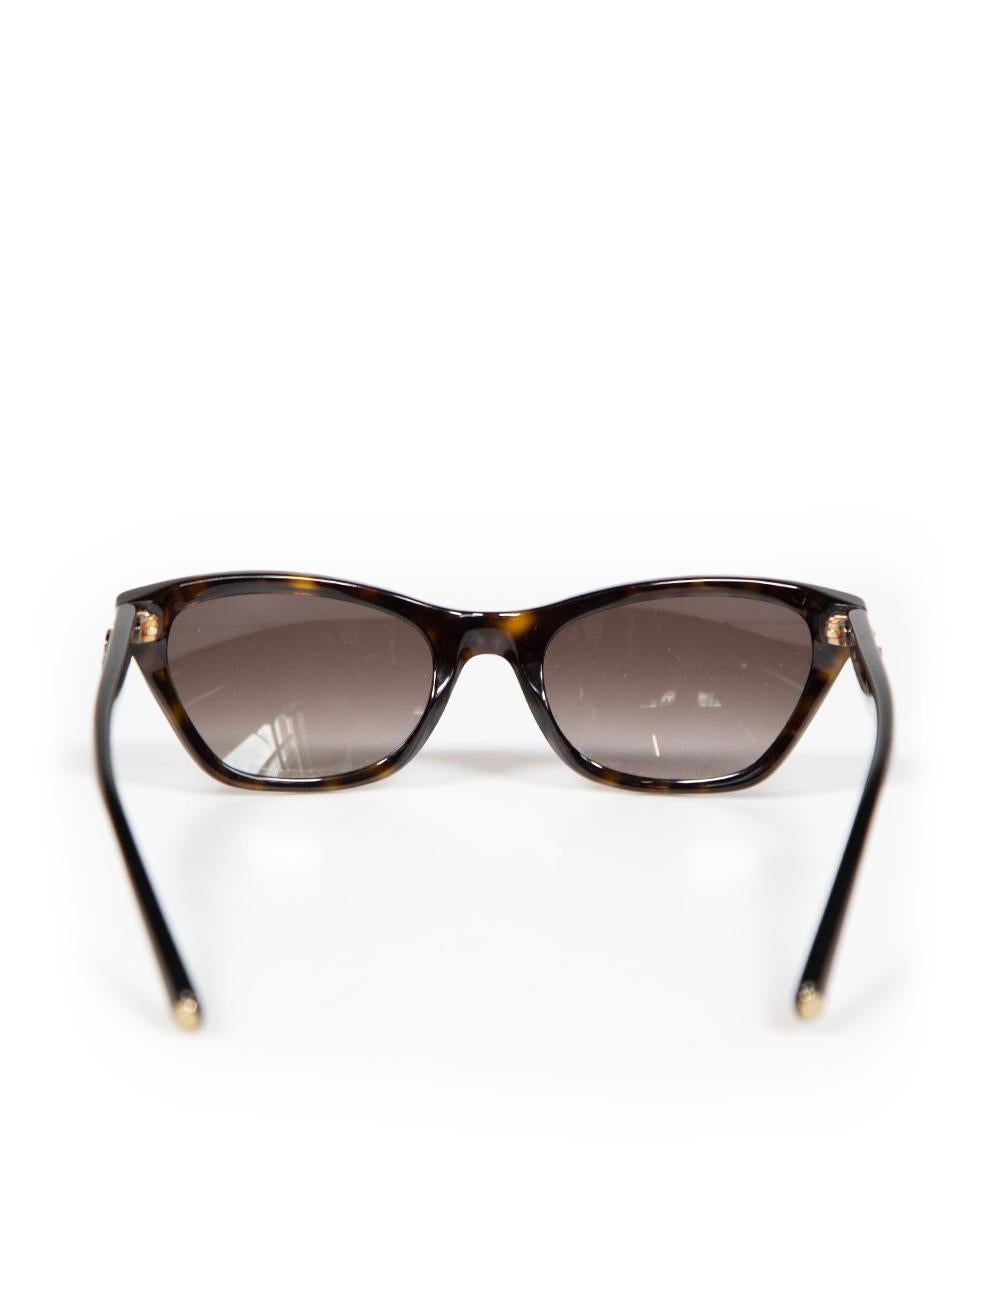 Dior Brown ‚ÄúLes Marquises‚Äù DiorHatutaa Sunglasses In Excellent Condition For Sale In London, GB